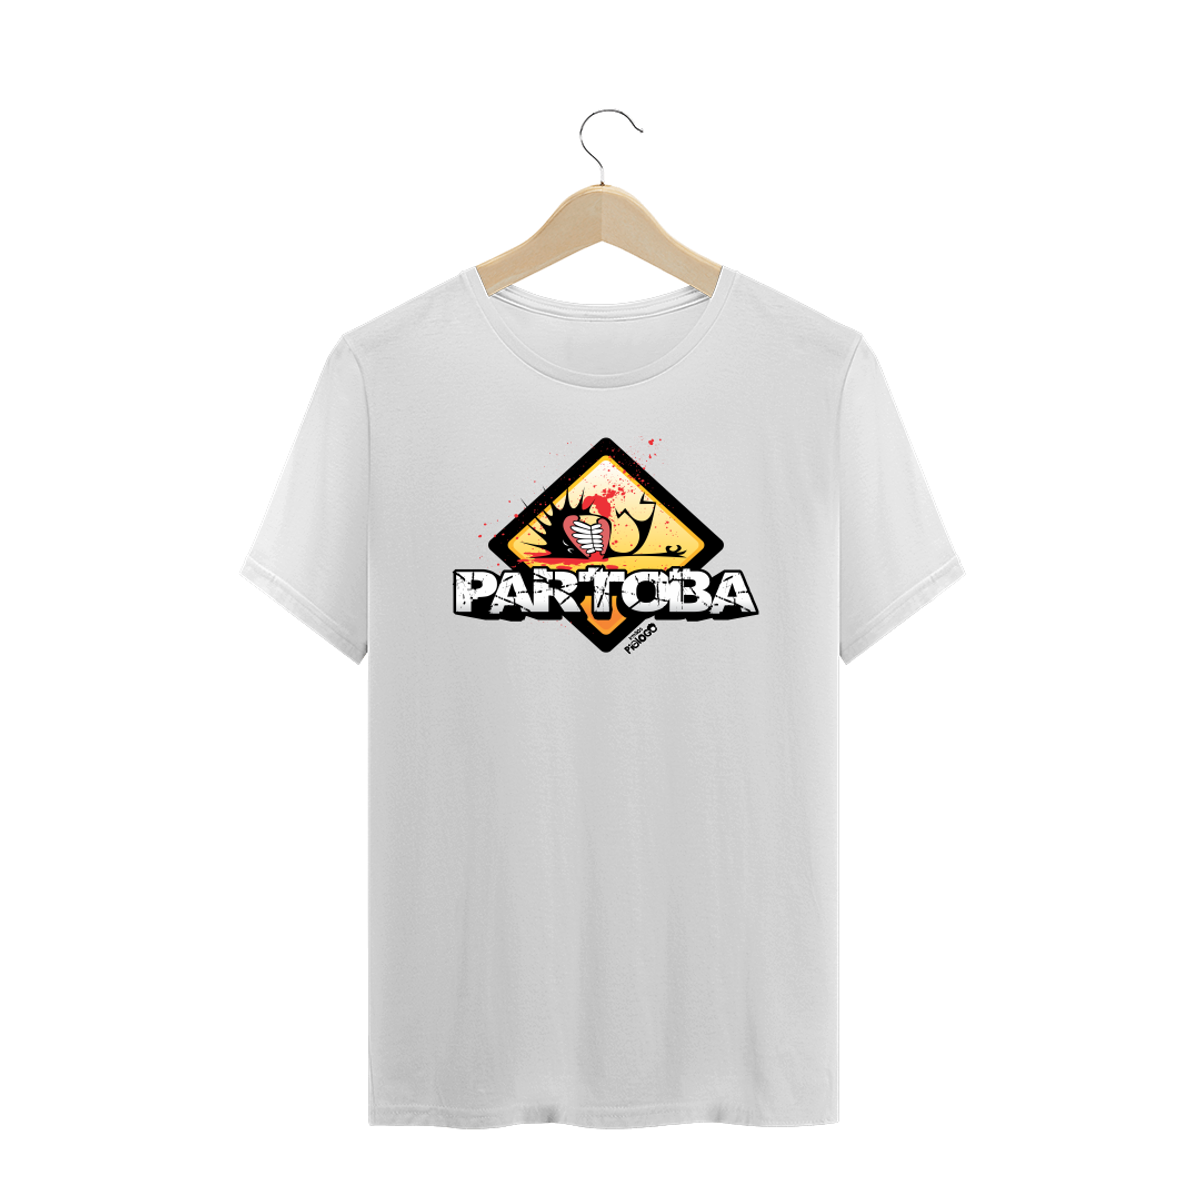 Nome do produto: Camiseta Partoba